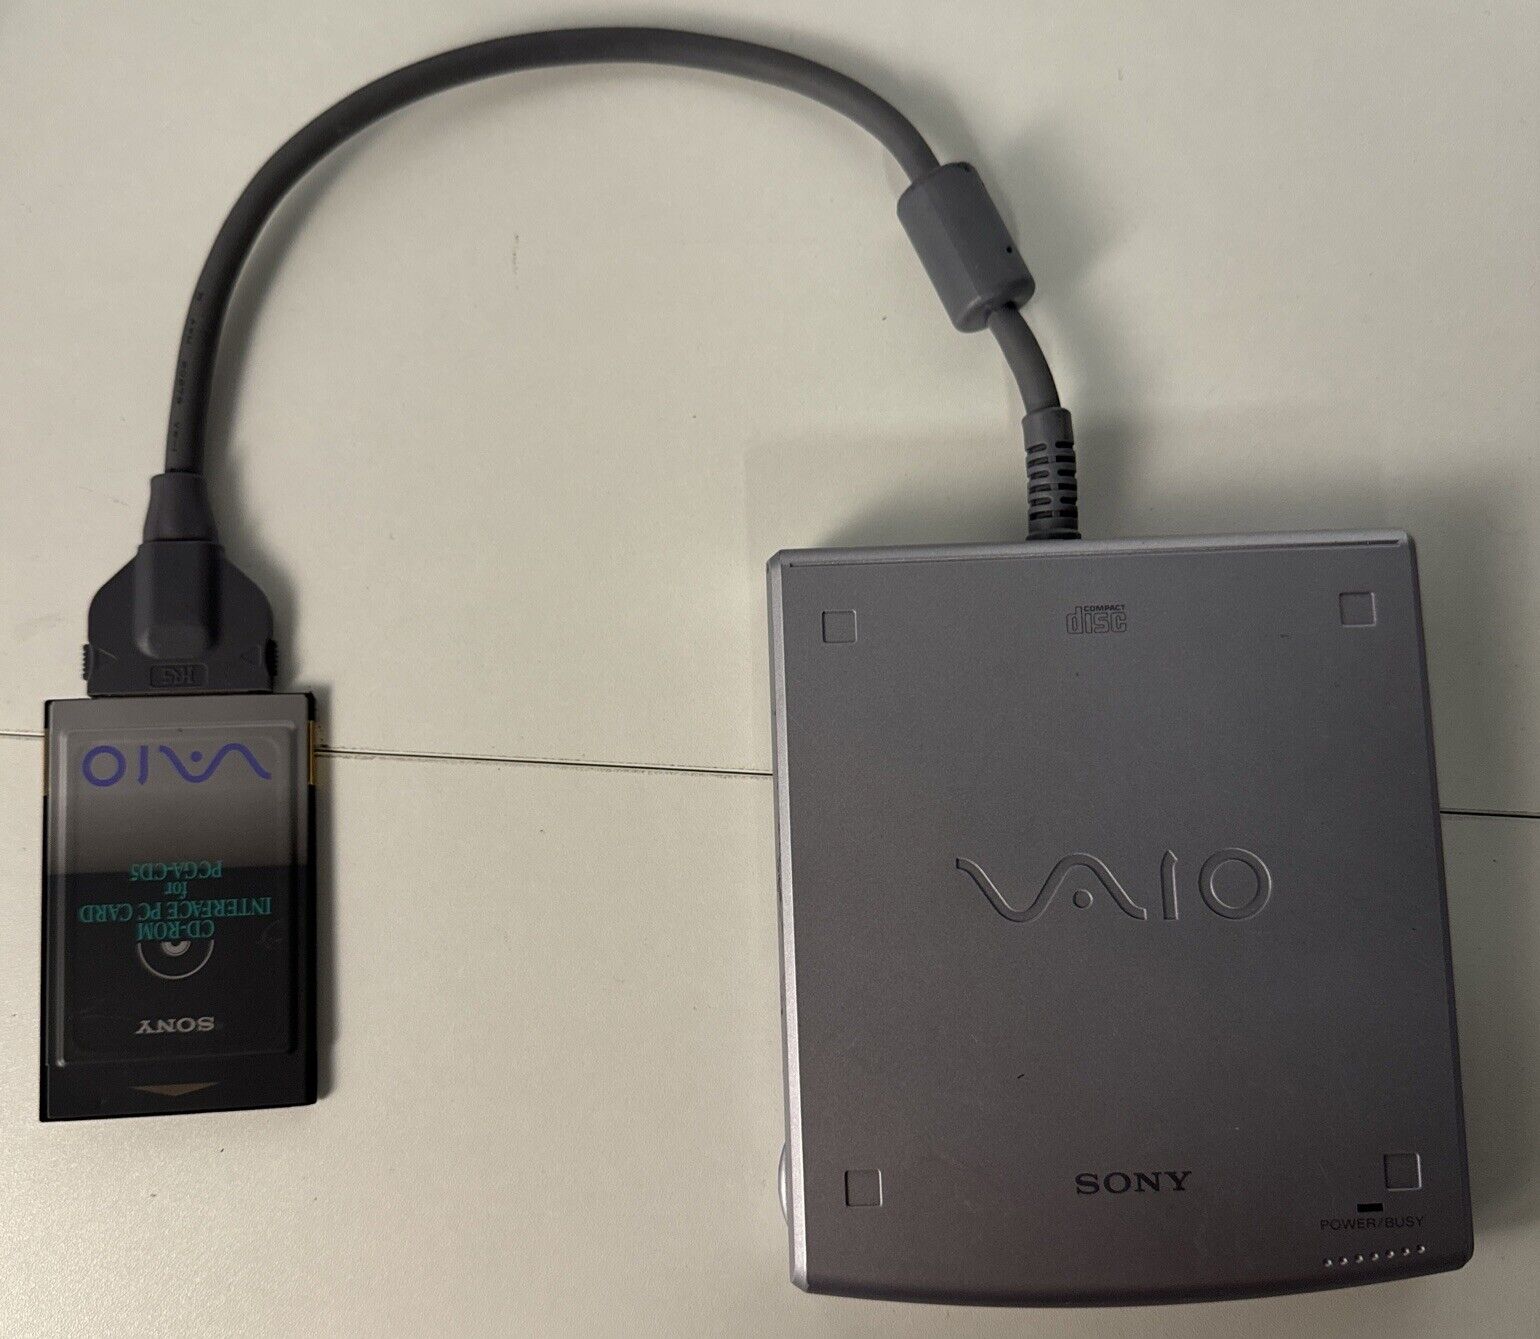 SONY VAIO PCGA-CD5 External Portable CD-ROM Drive Made in Japan